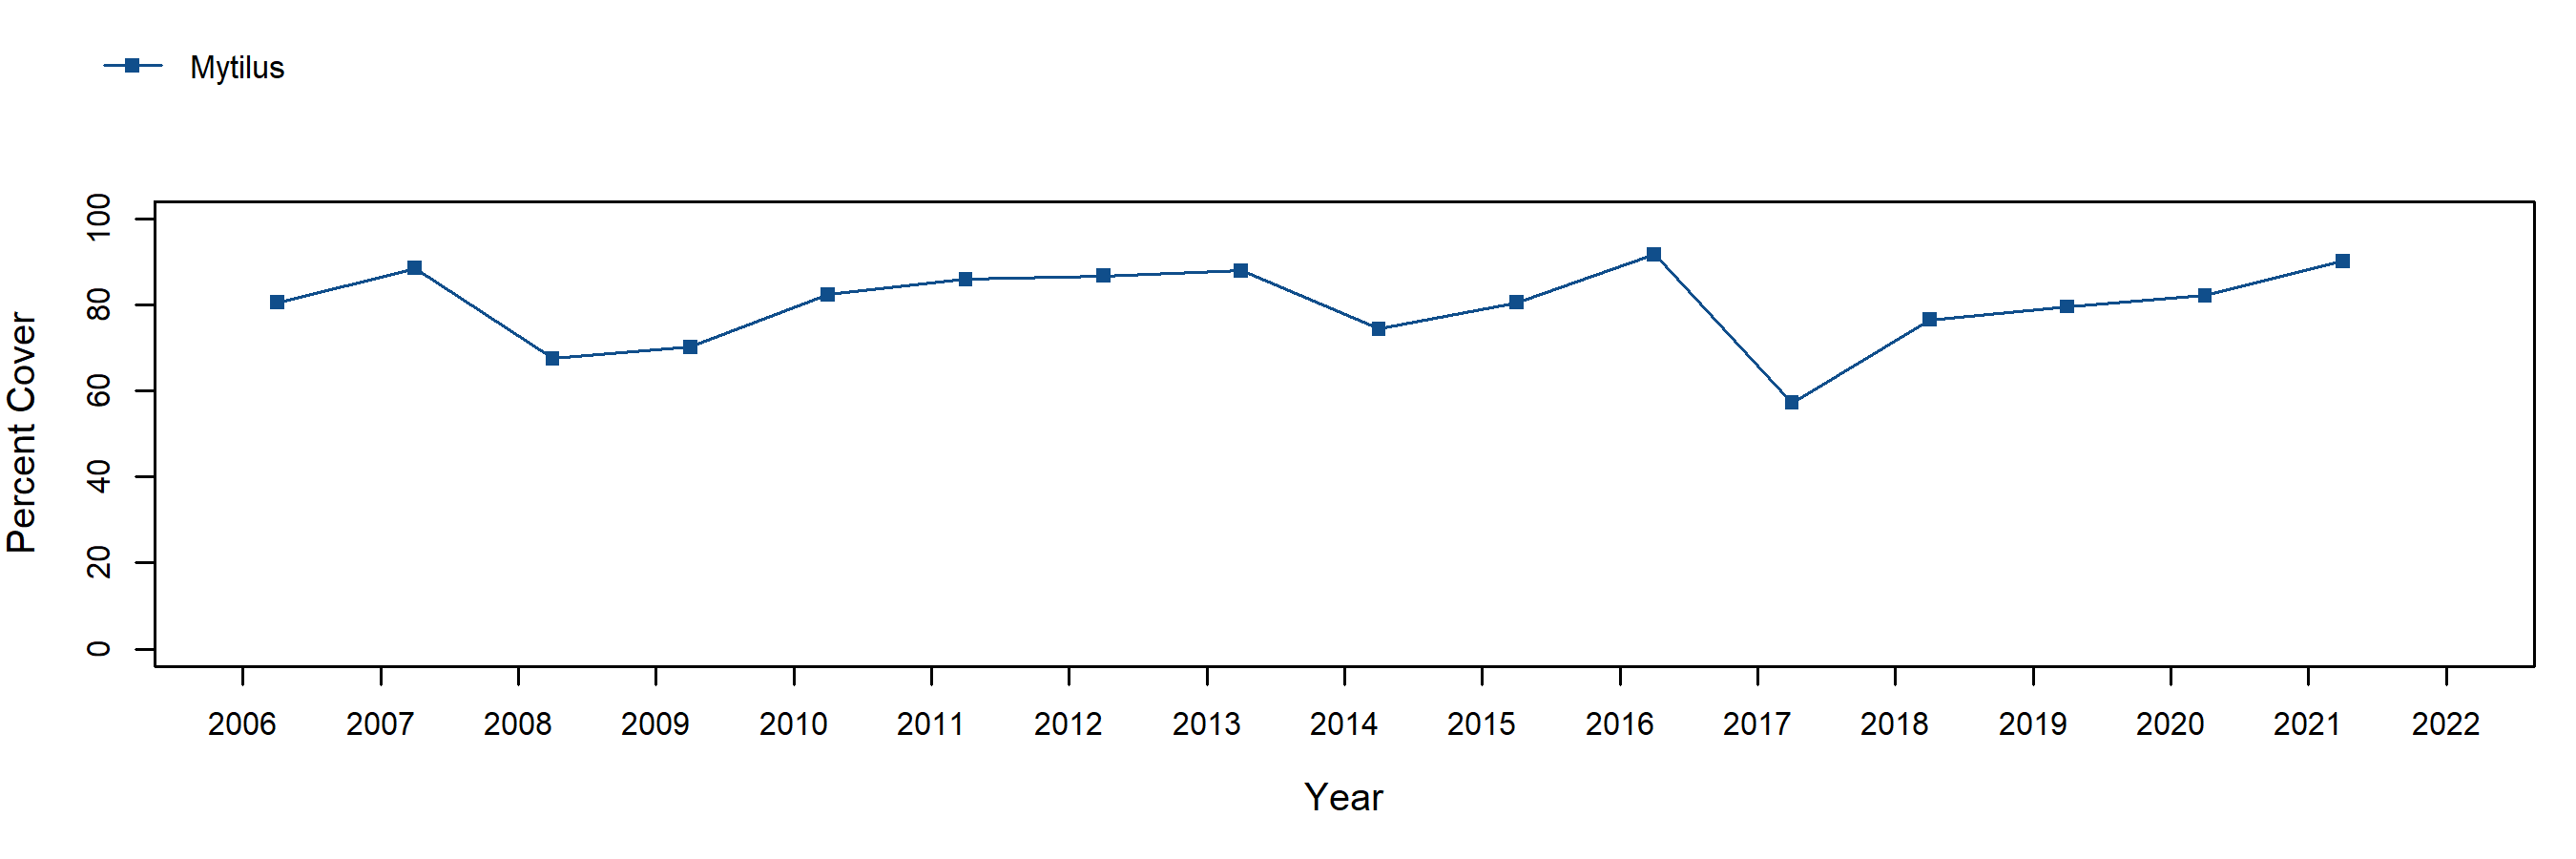 Point Bonita Mytilus trend plot